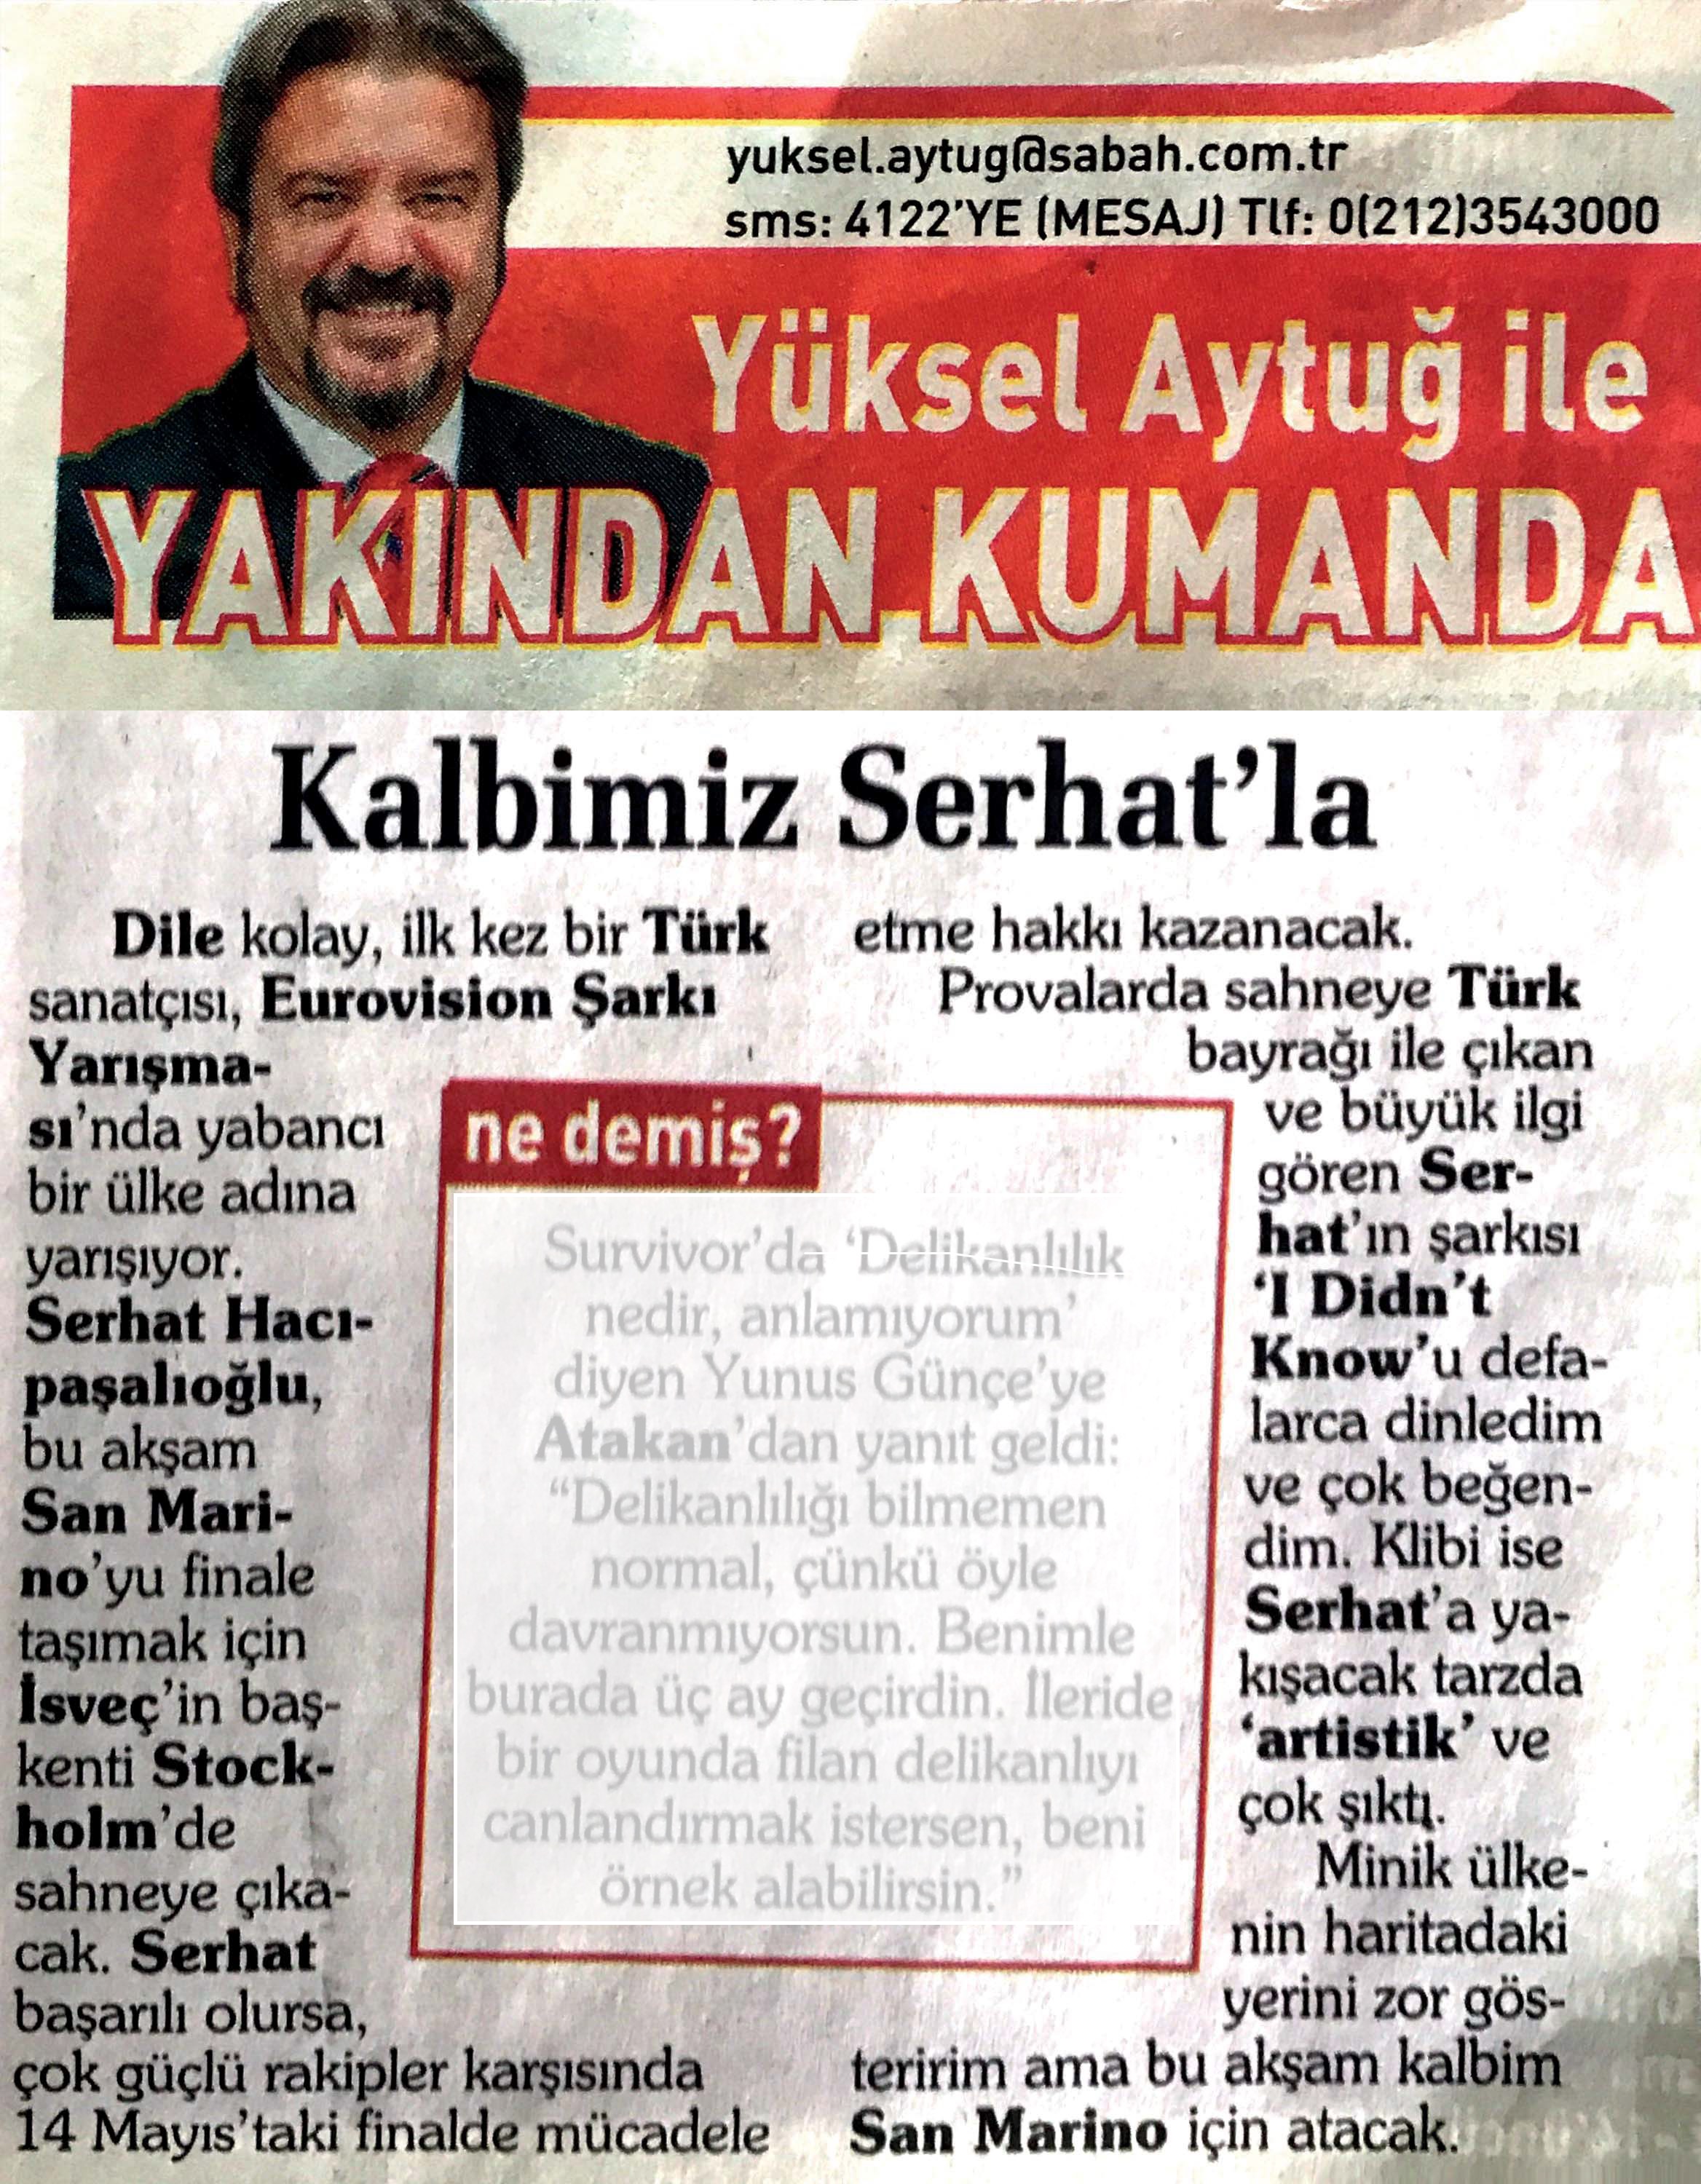 Kalbimiz Serhat'la - 10.05.2016 - Sabah Gazetesi